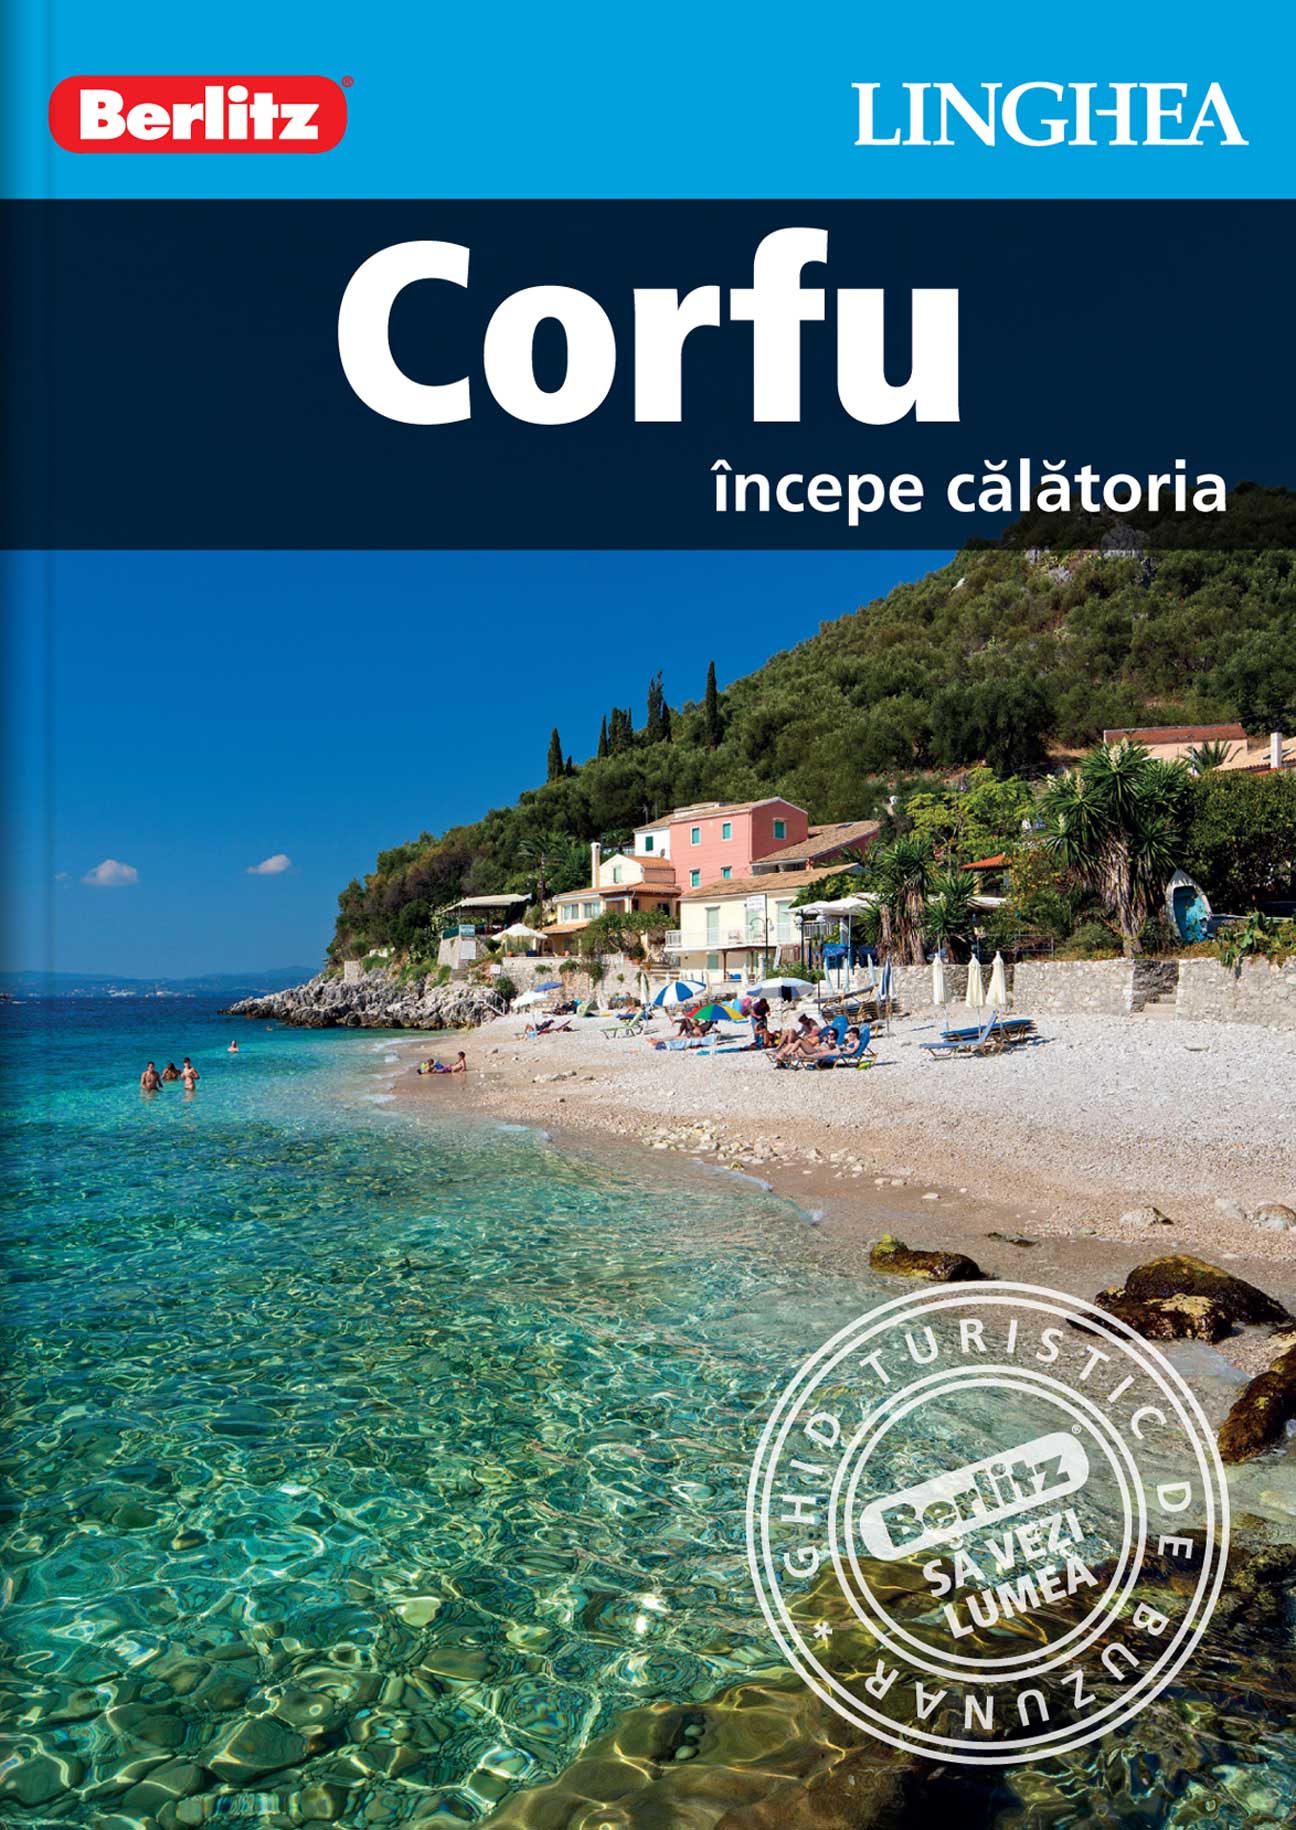 Corfu: Incepe calatoria - Berlitz